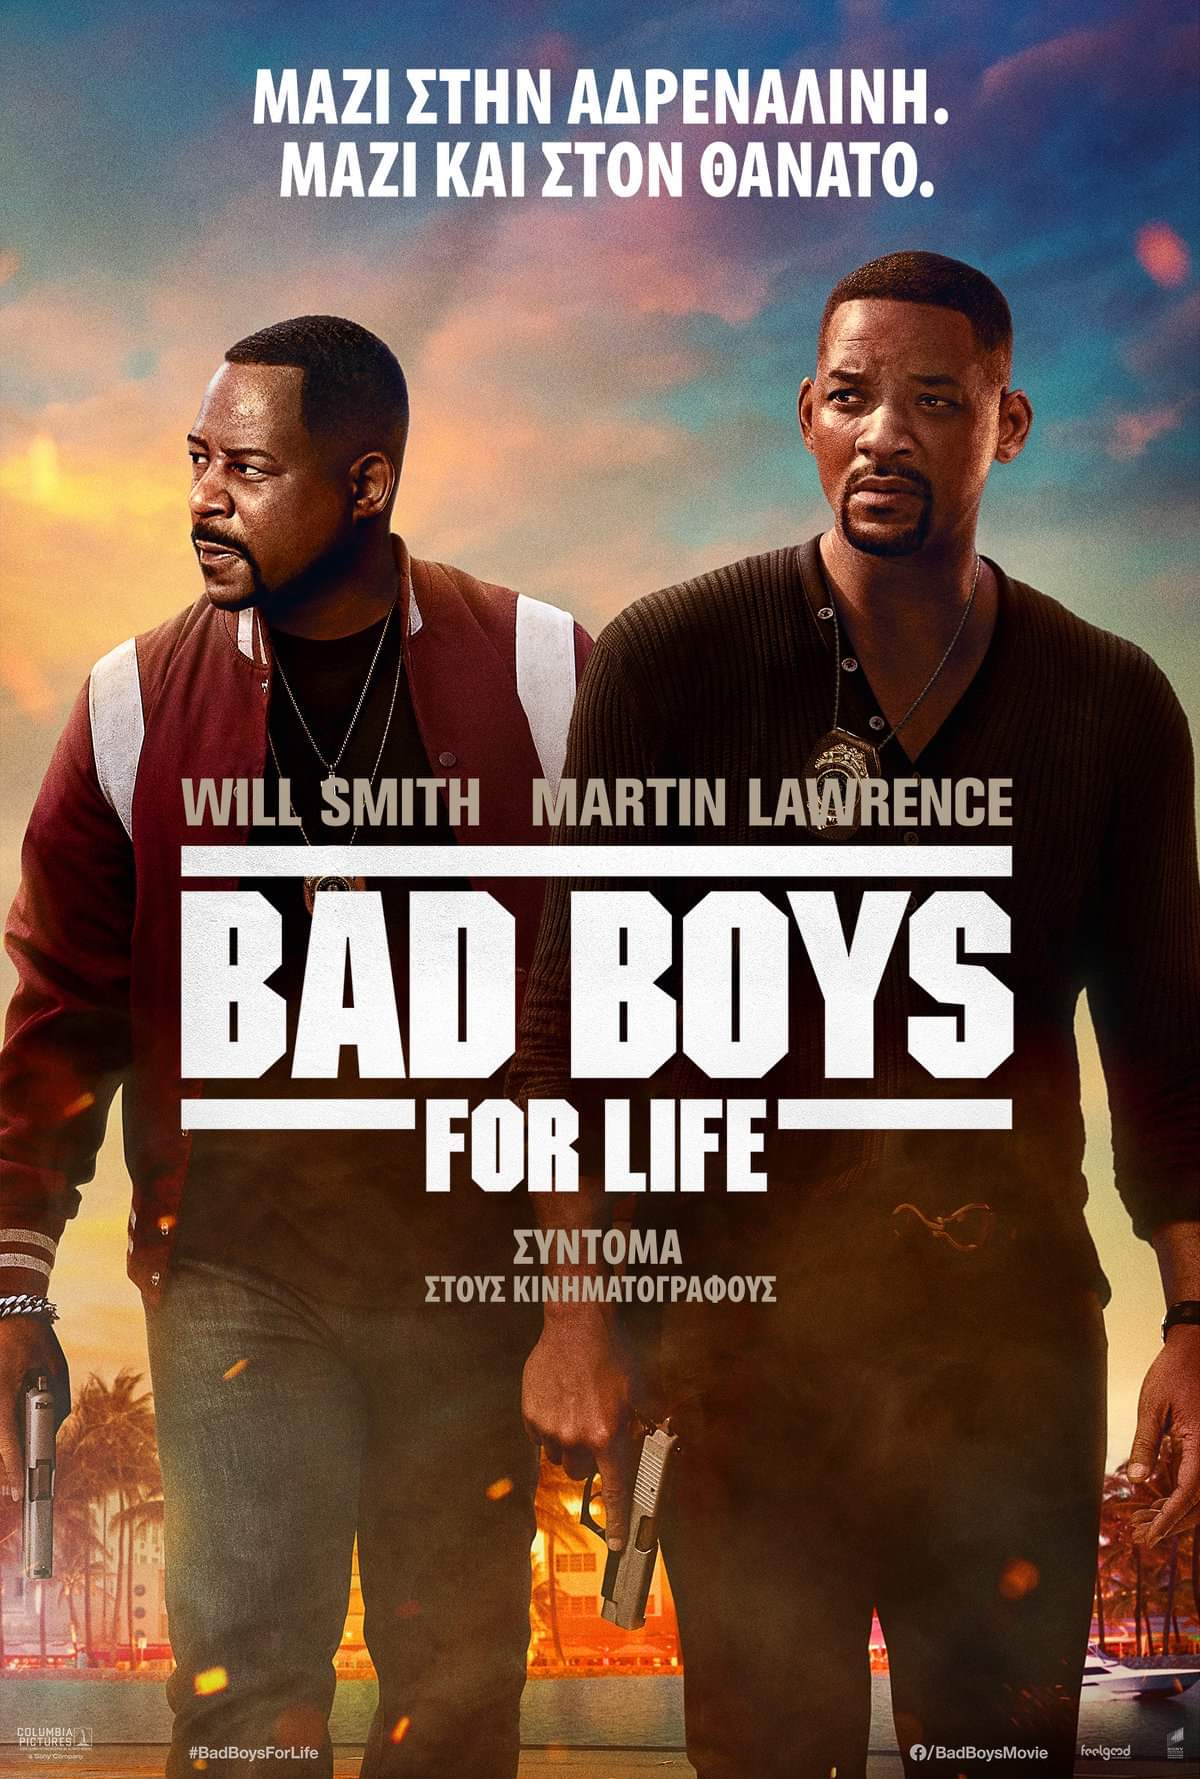 bad boys for life dvd